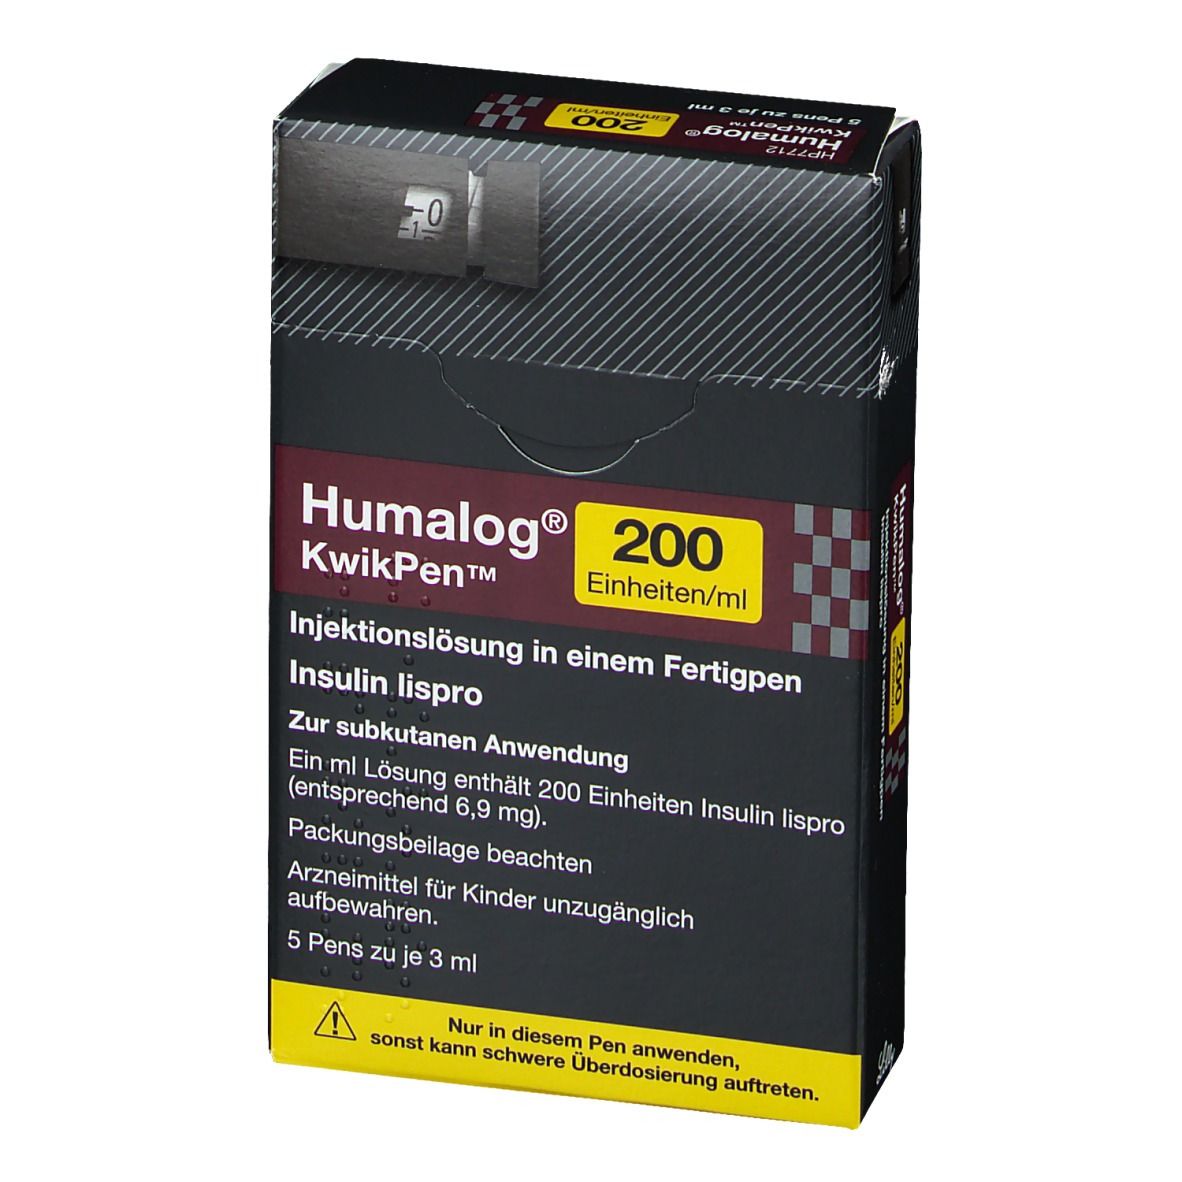 Humalog® KwikPen™ 200 Einheiten/ml